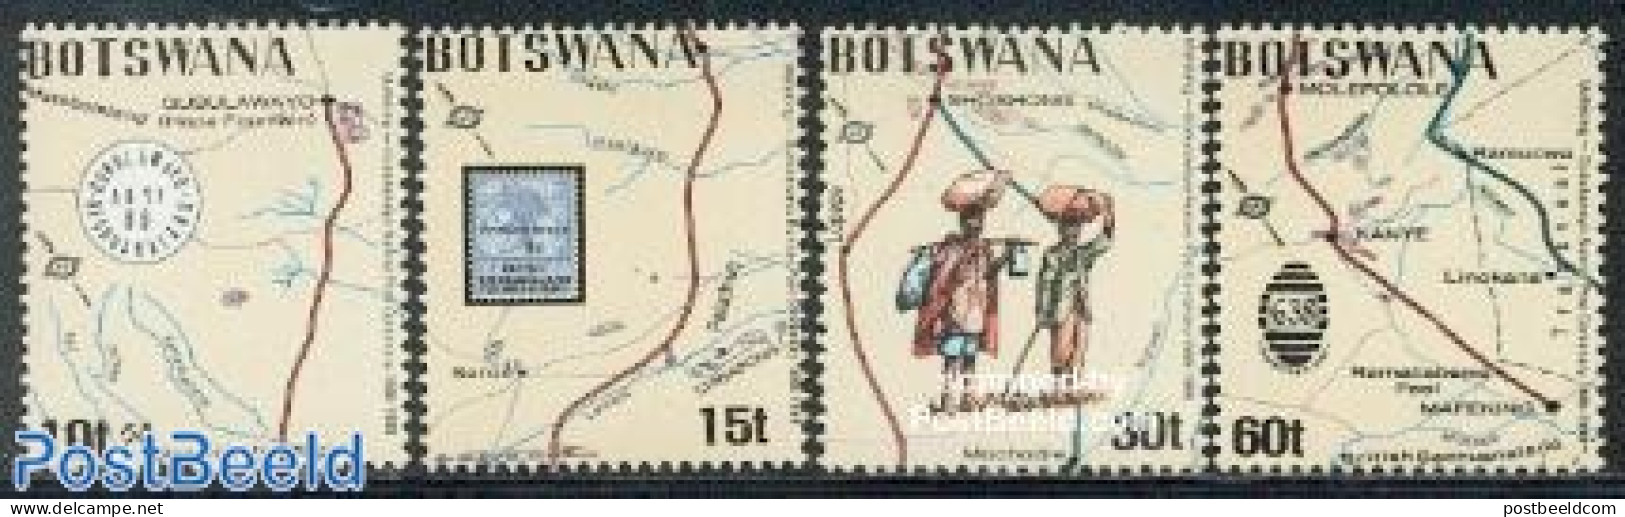 Botswana 1988 Postal Line 4v, Mint NH, Various - Post - Stamps On Stamps - Maps - Post